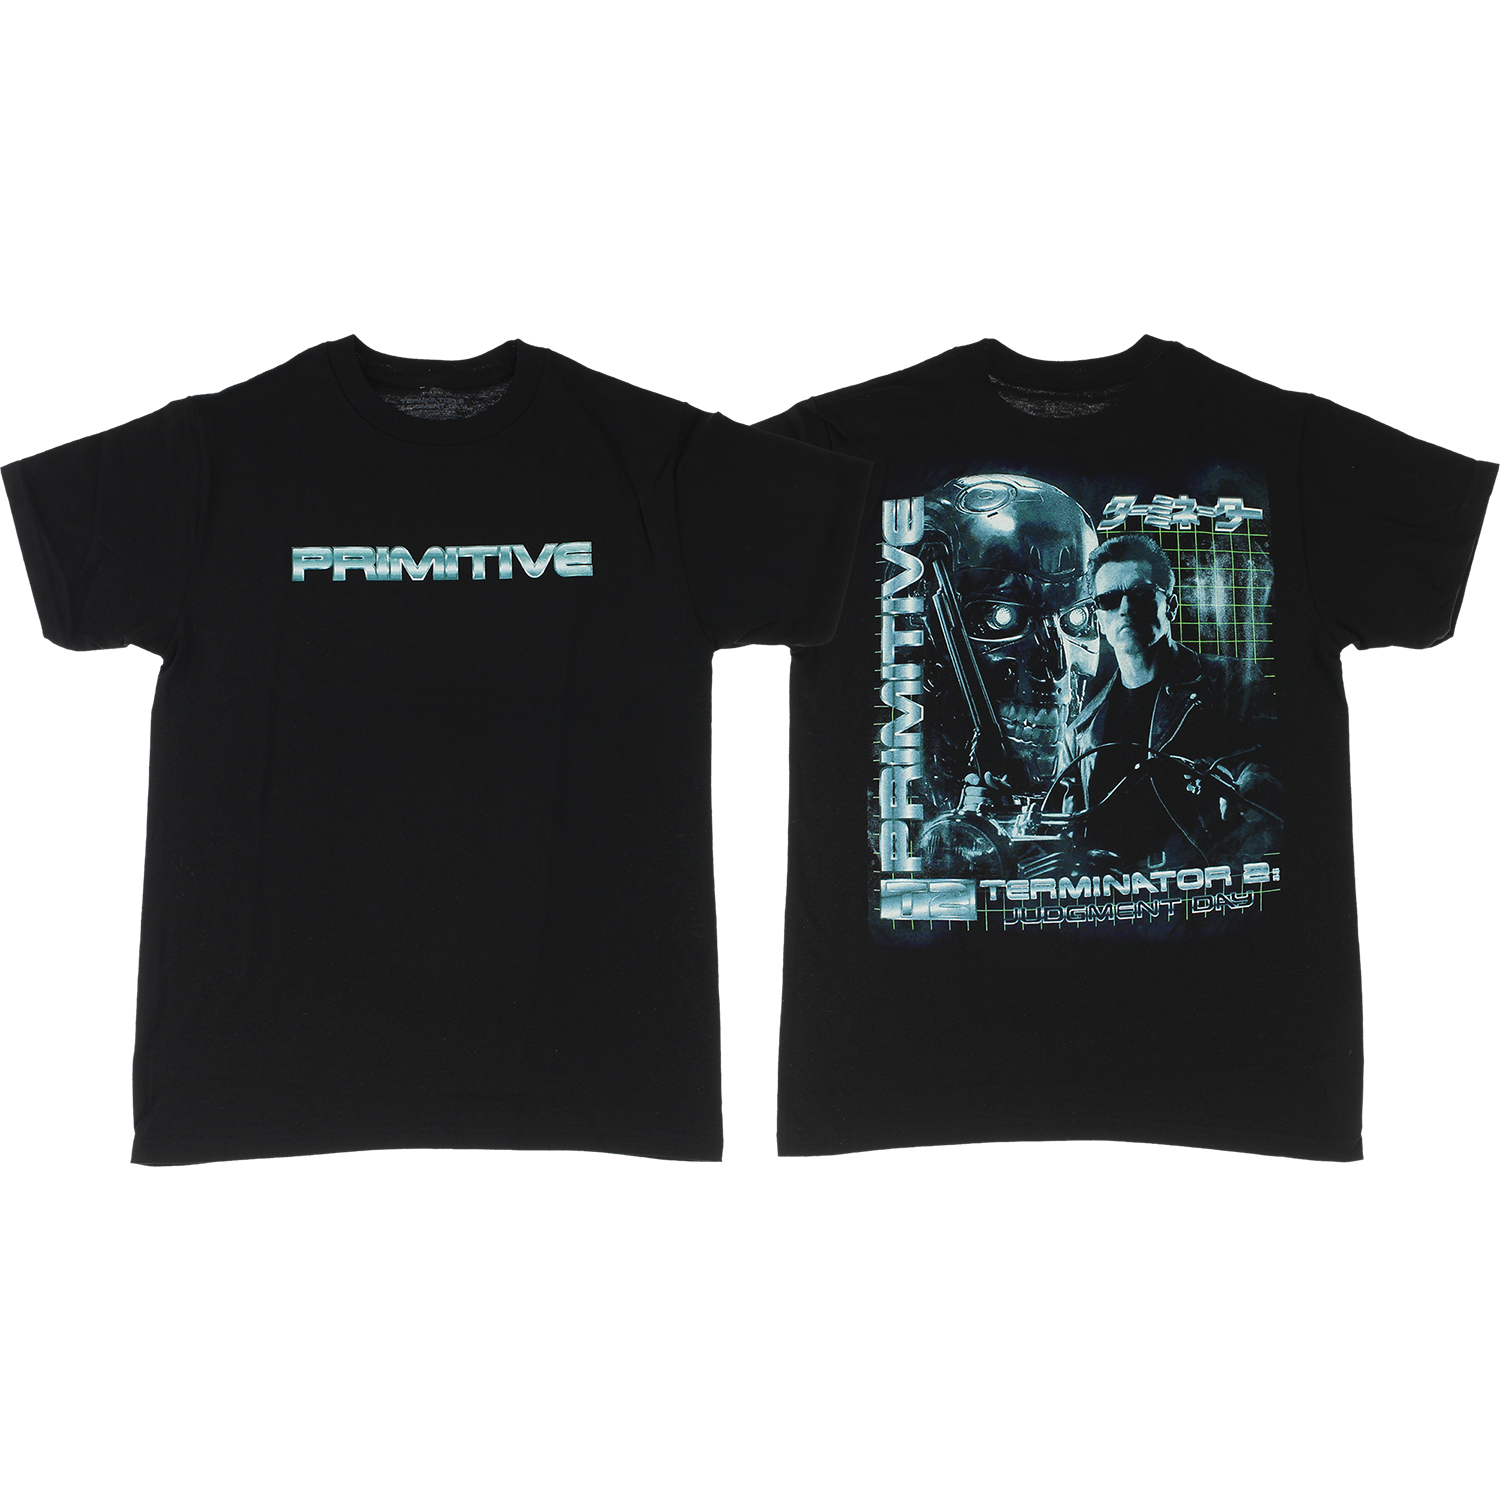 Primitive Box Set Short Sleeve T-Shirt Black